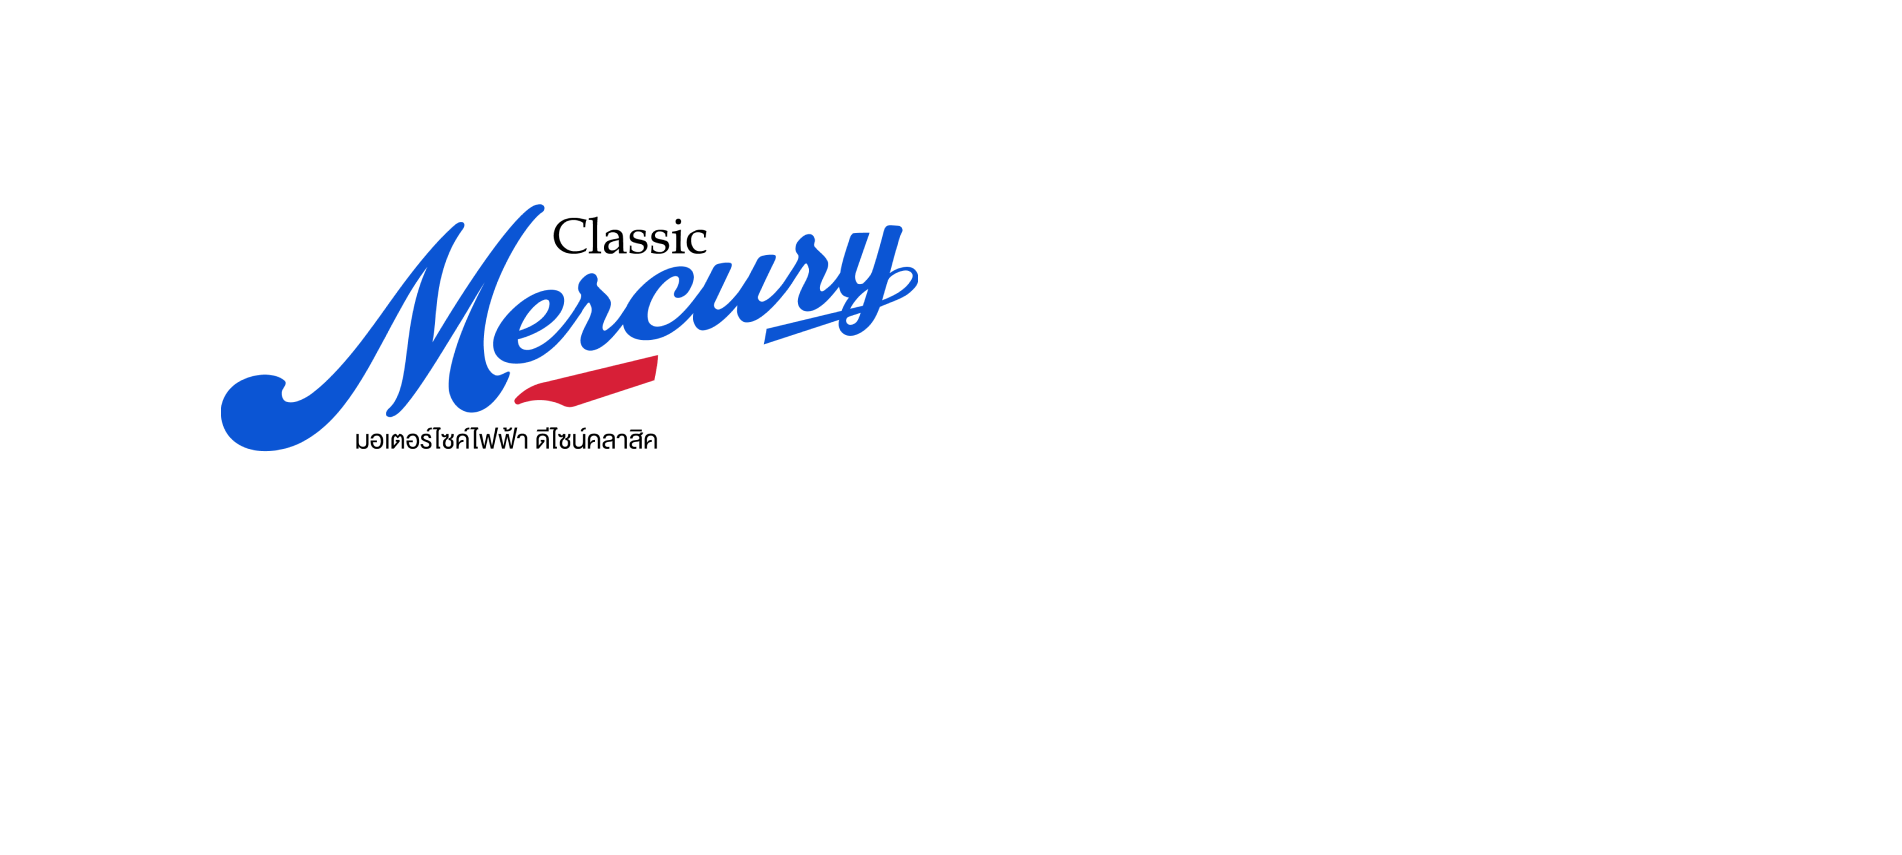 ev-motorcycle-mercury-title